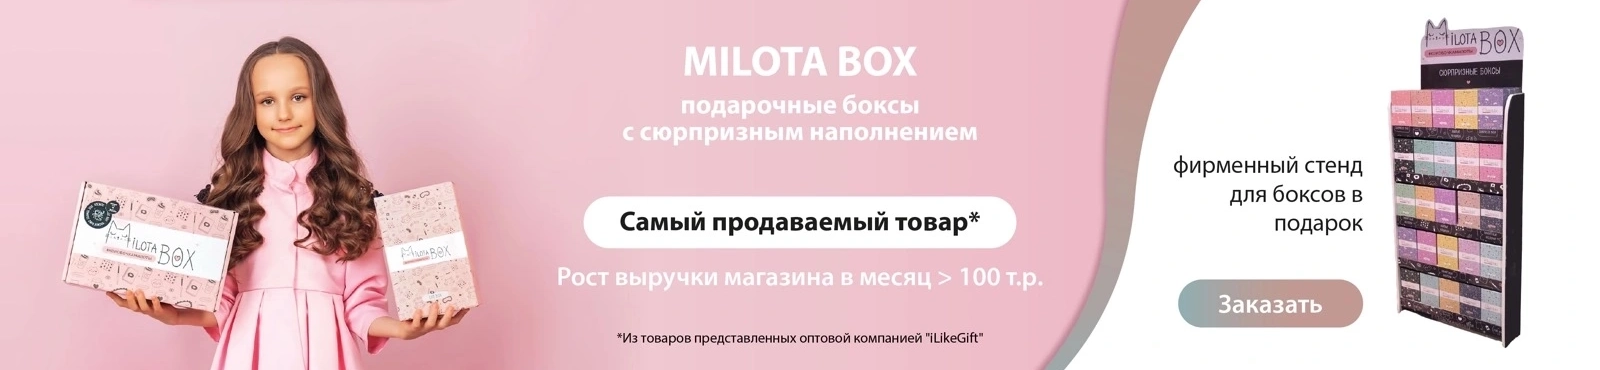 MiLOTA BOX 